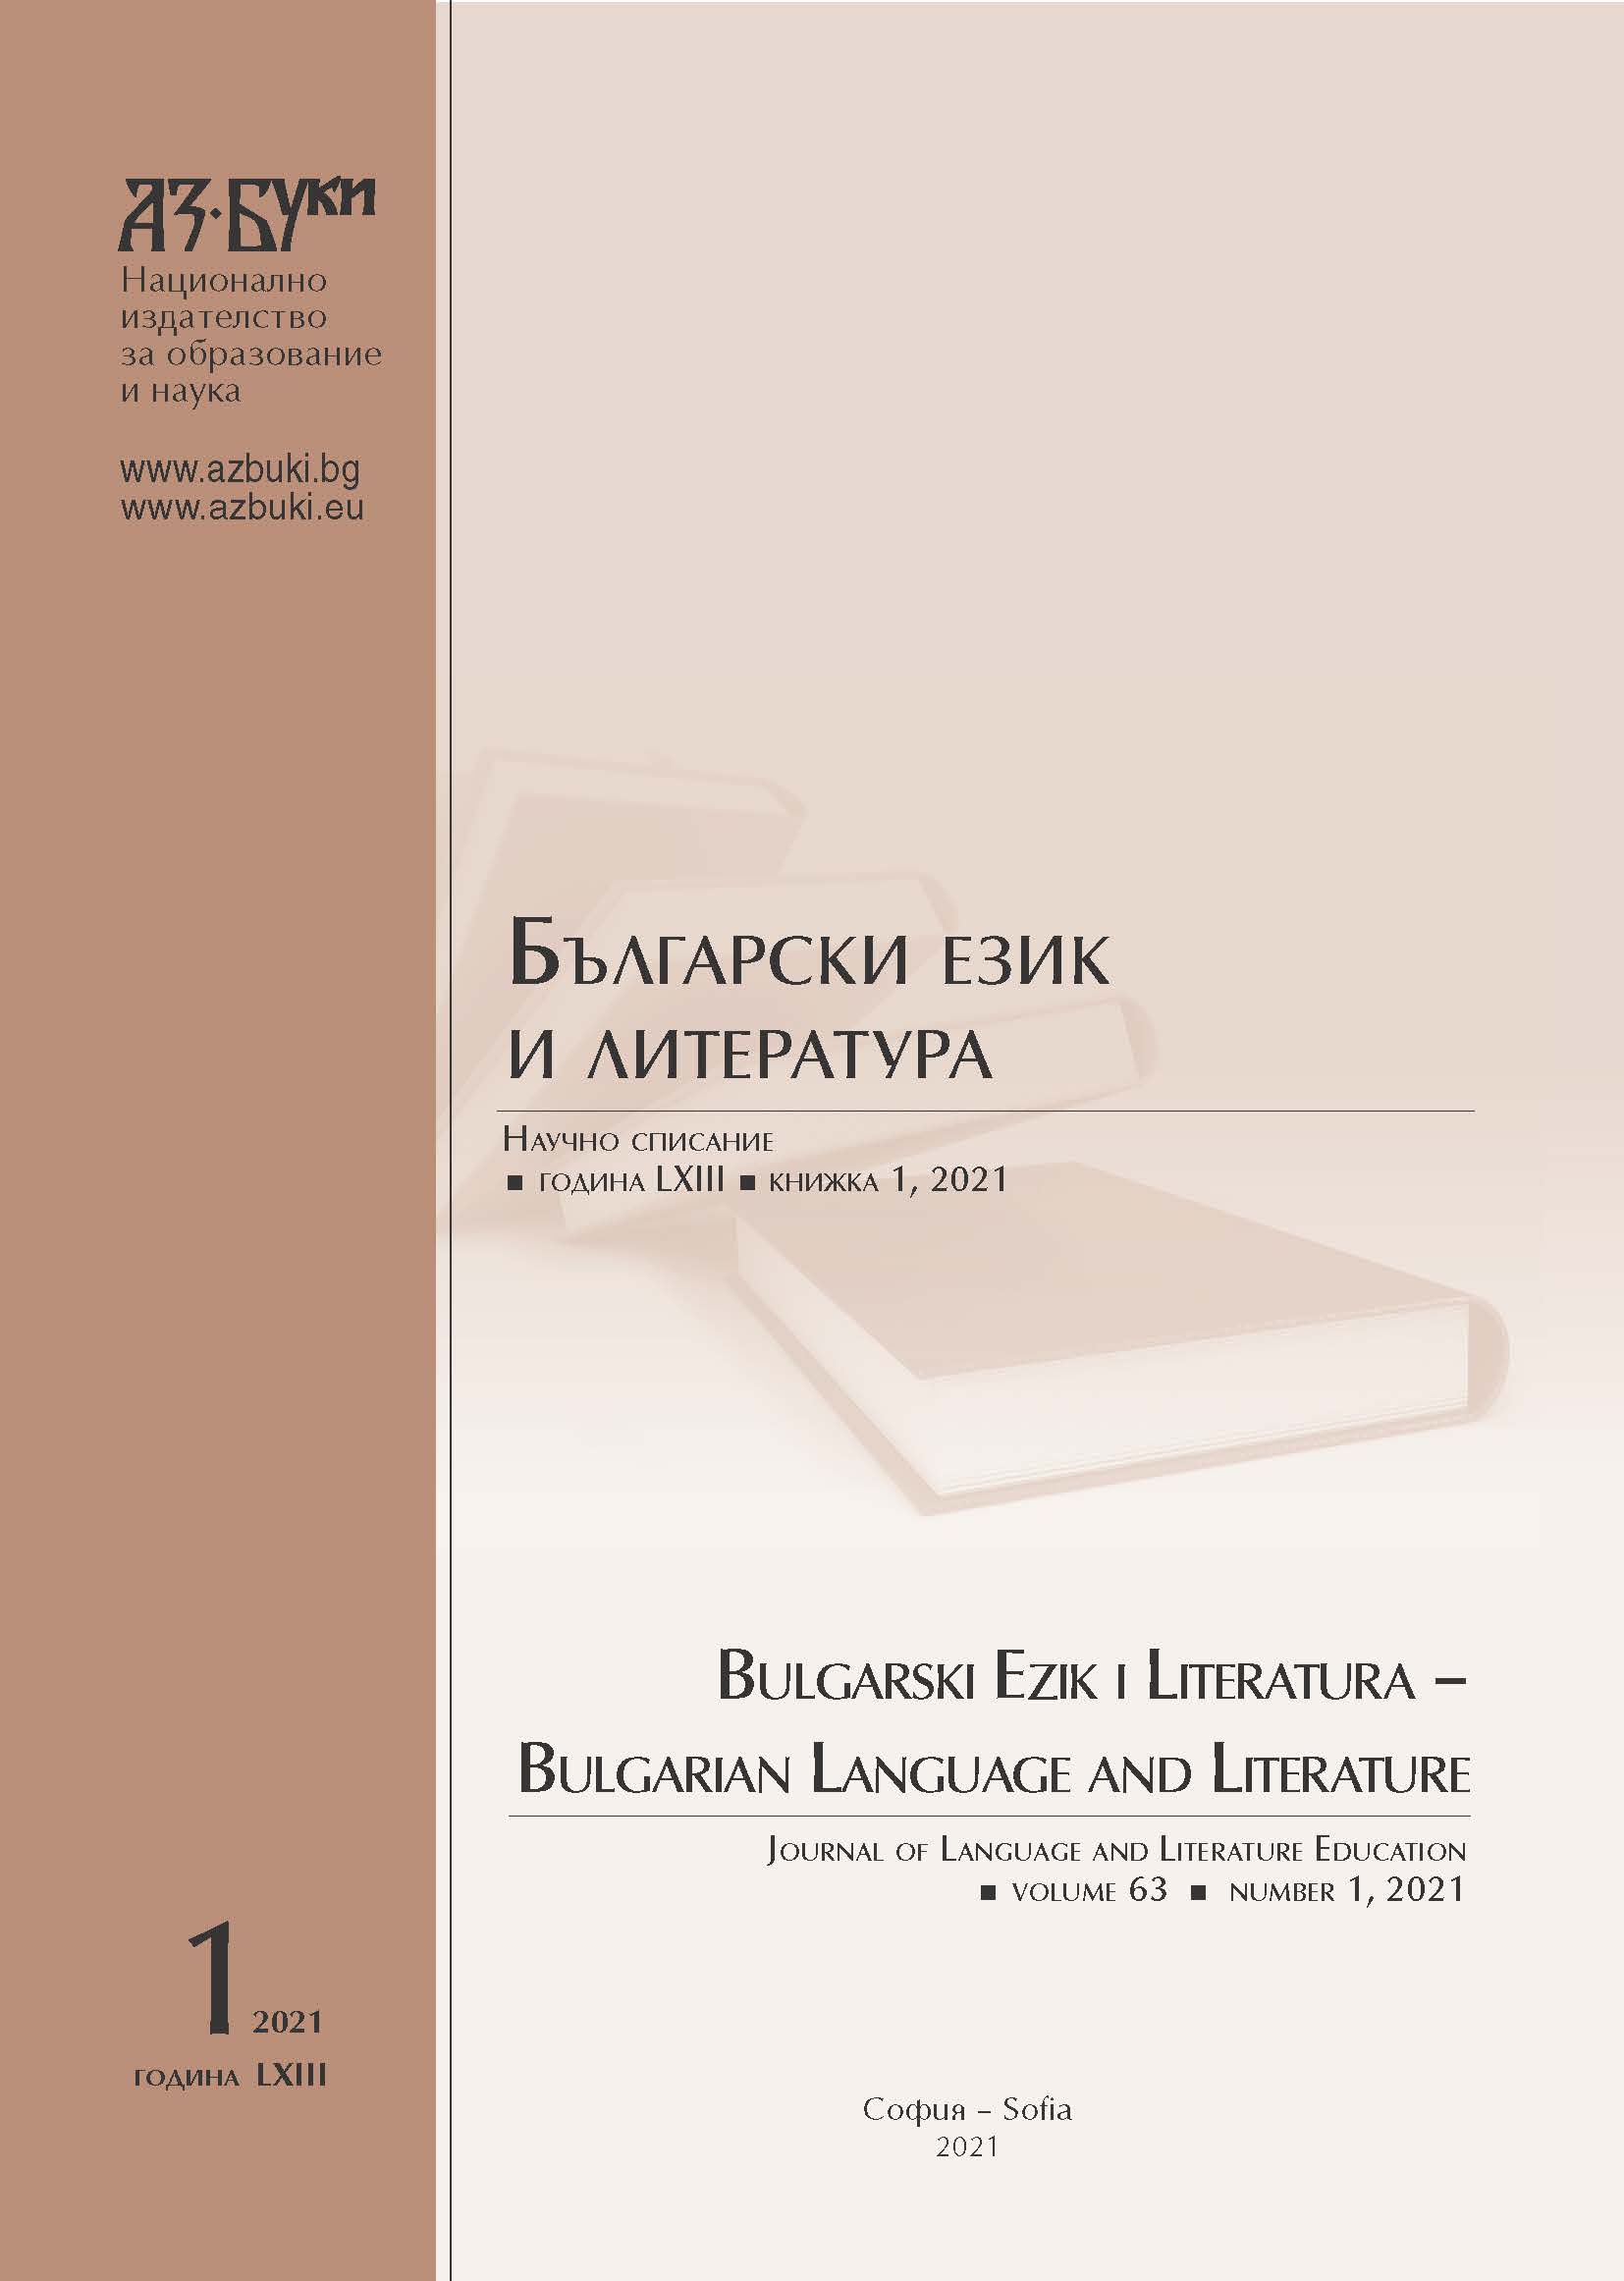 Bulgarian Language and Literature